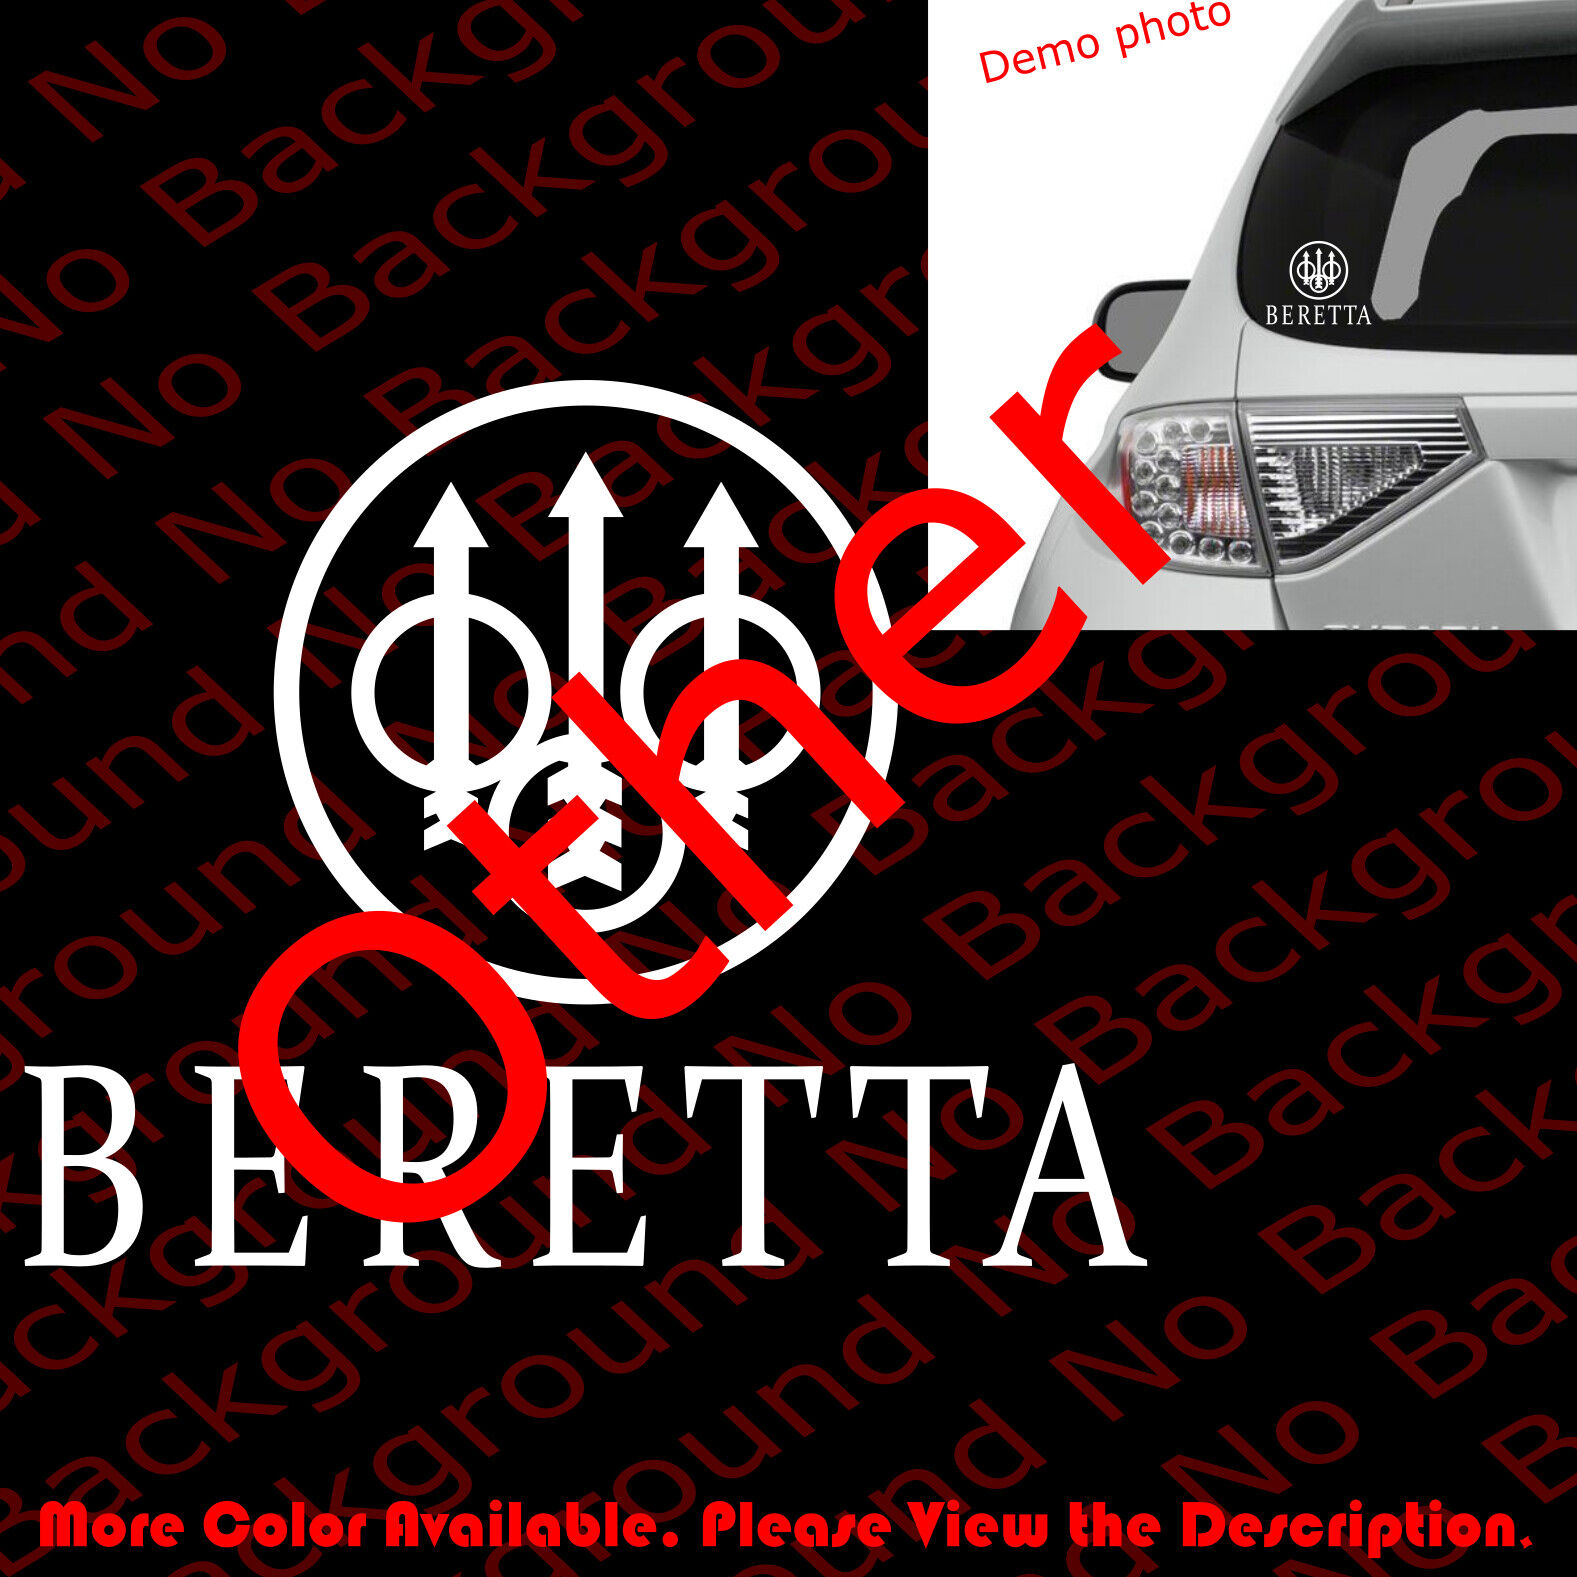 Beretta Firearms Vinyl Decal Die Cut Sticker for 2A Gun Rights Pistol FA029